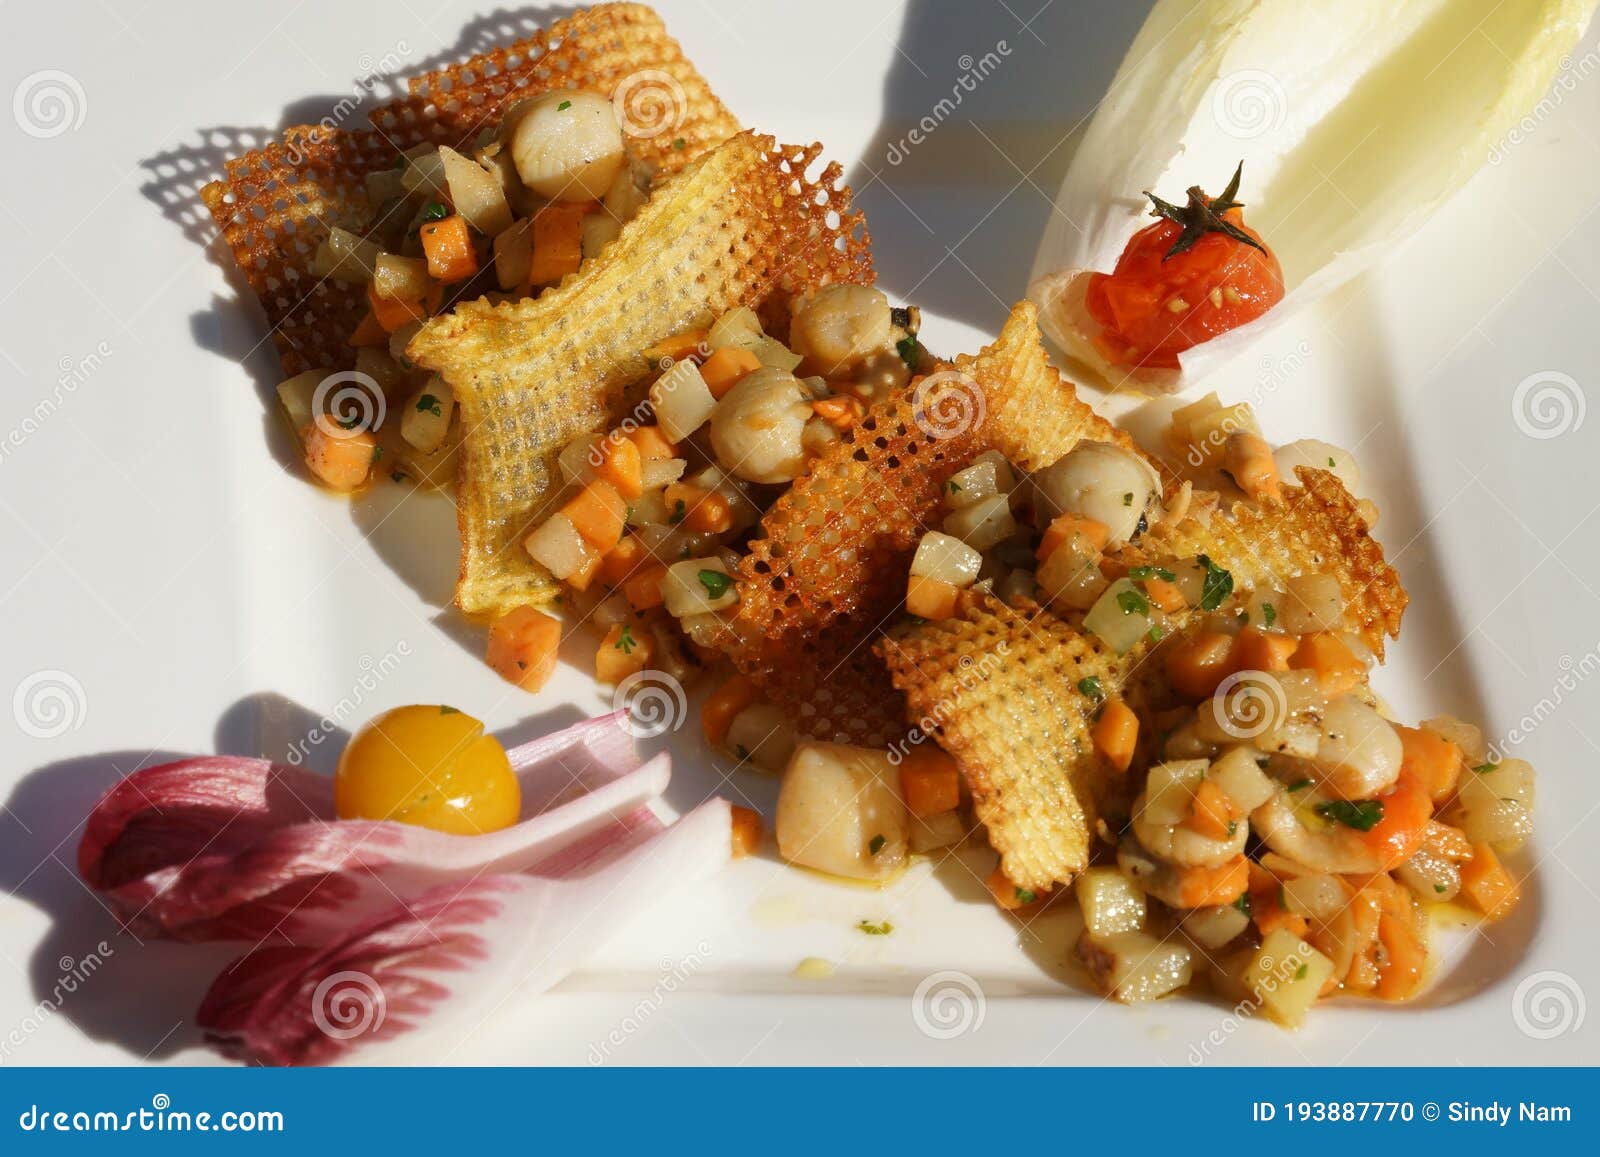 gourmet dish mille-feuilles of potato waffles and pan fried scallops